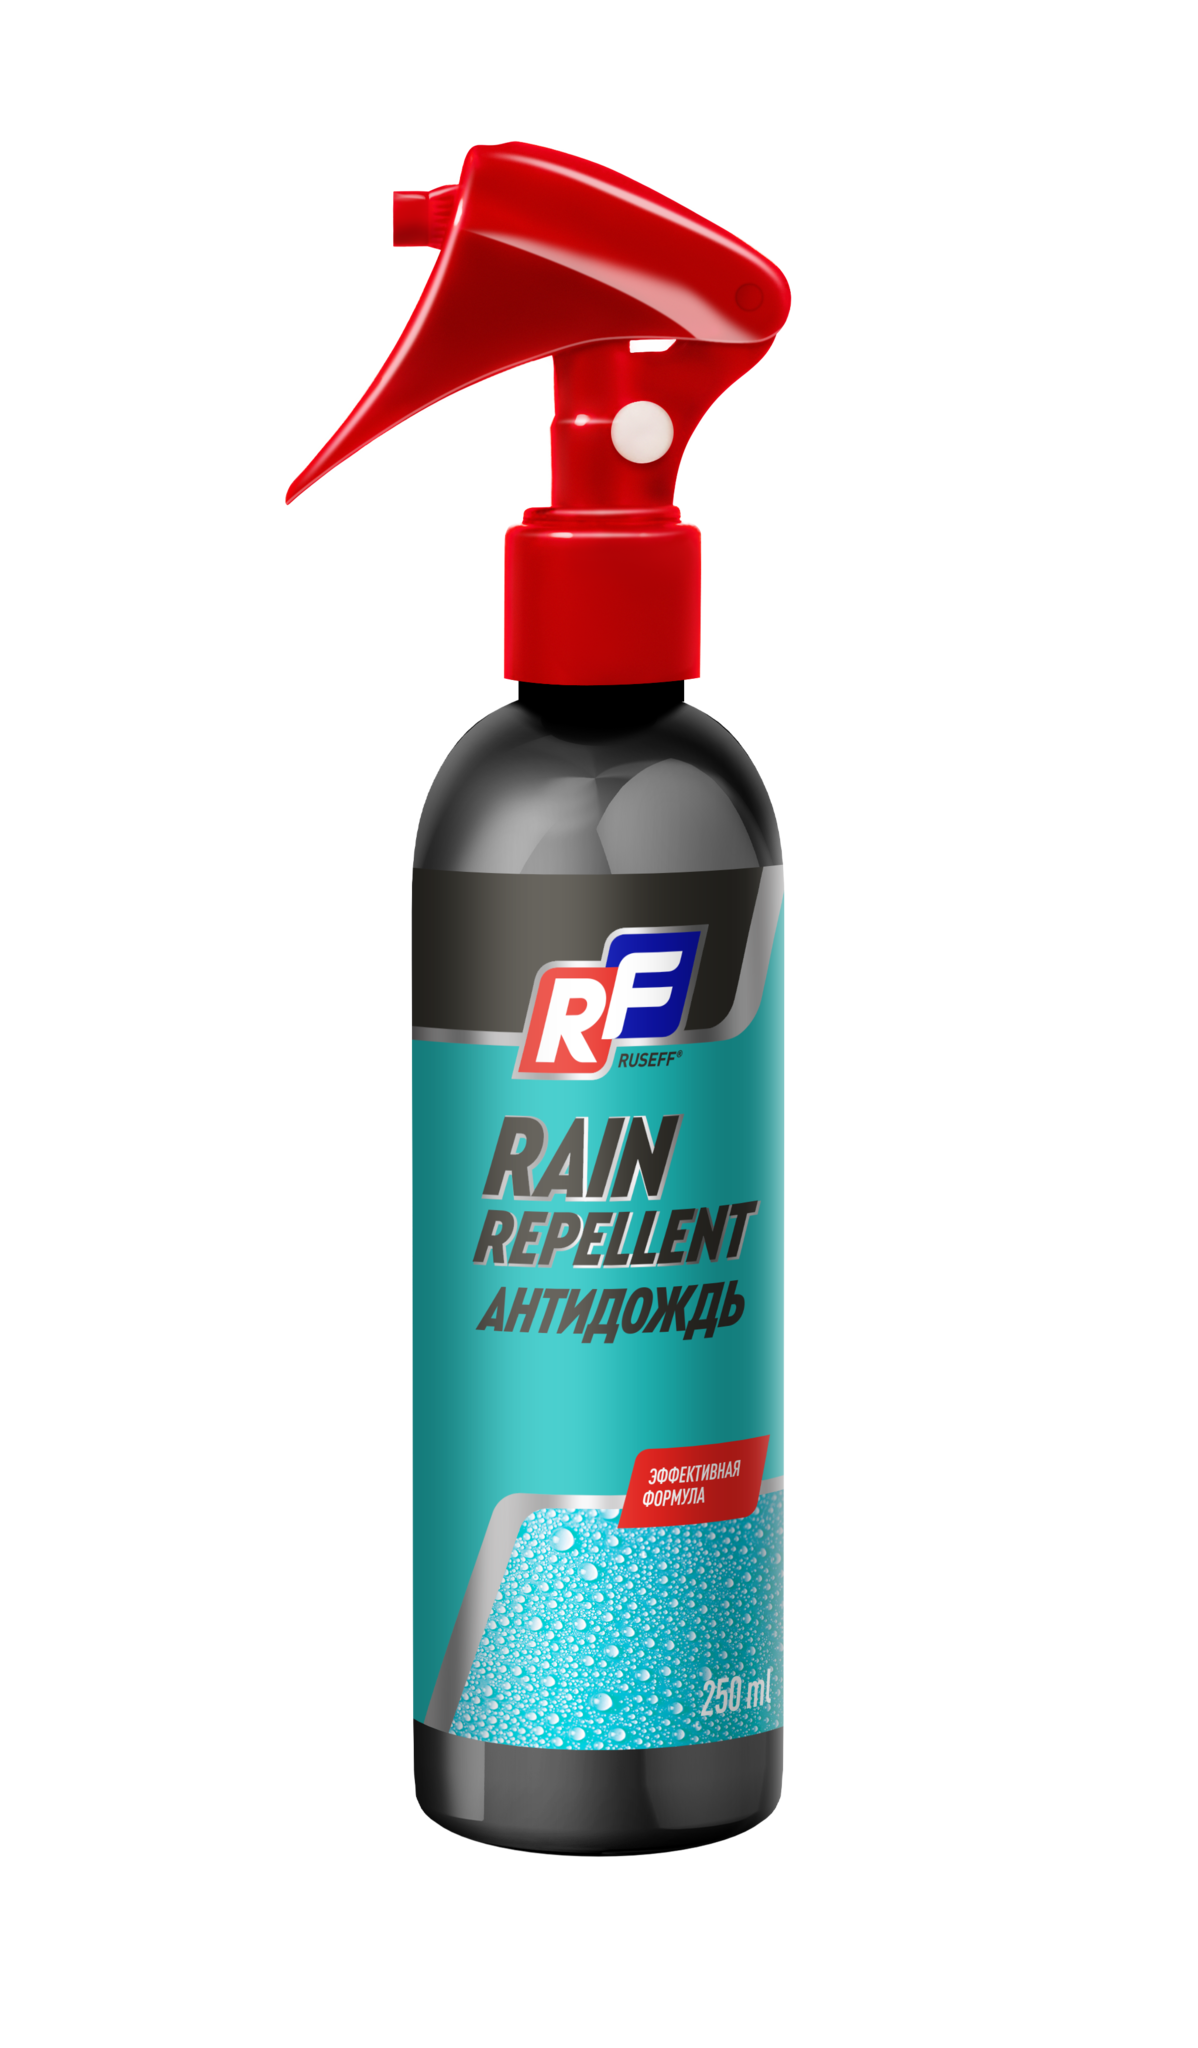 Ruseff Rain Repellent Антидождь